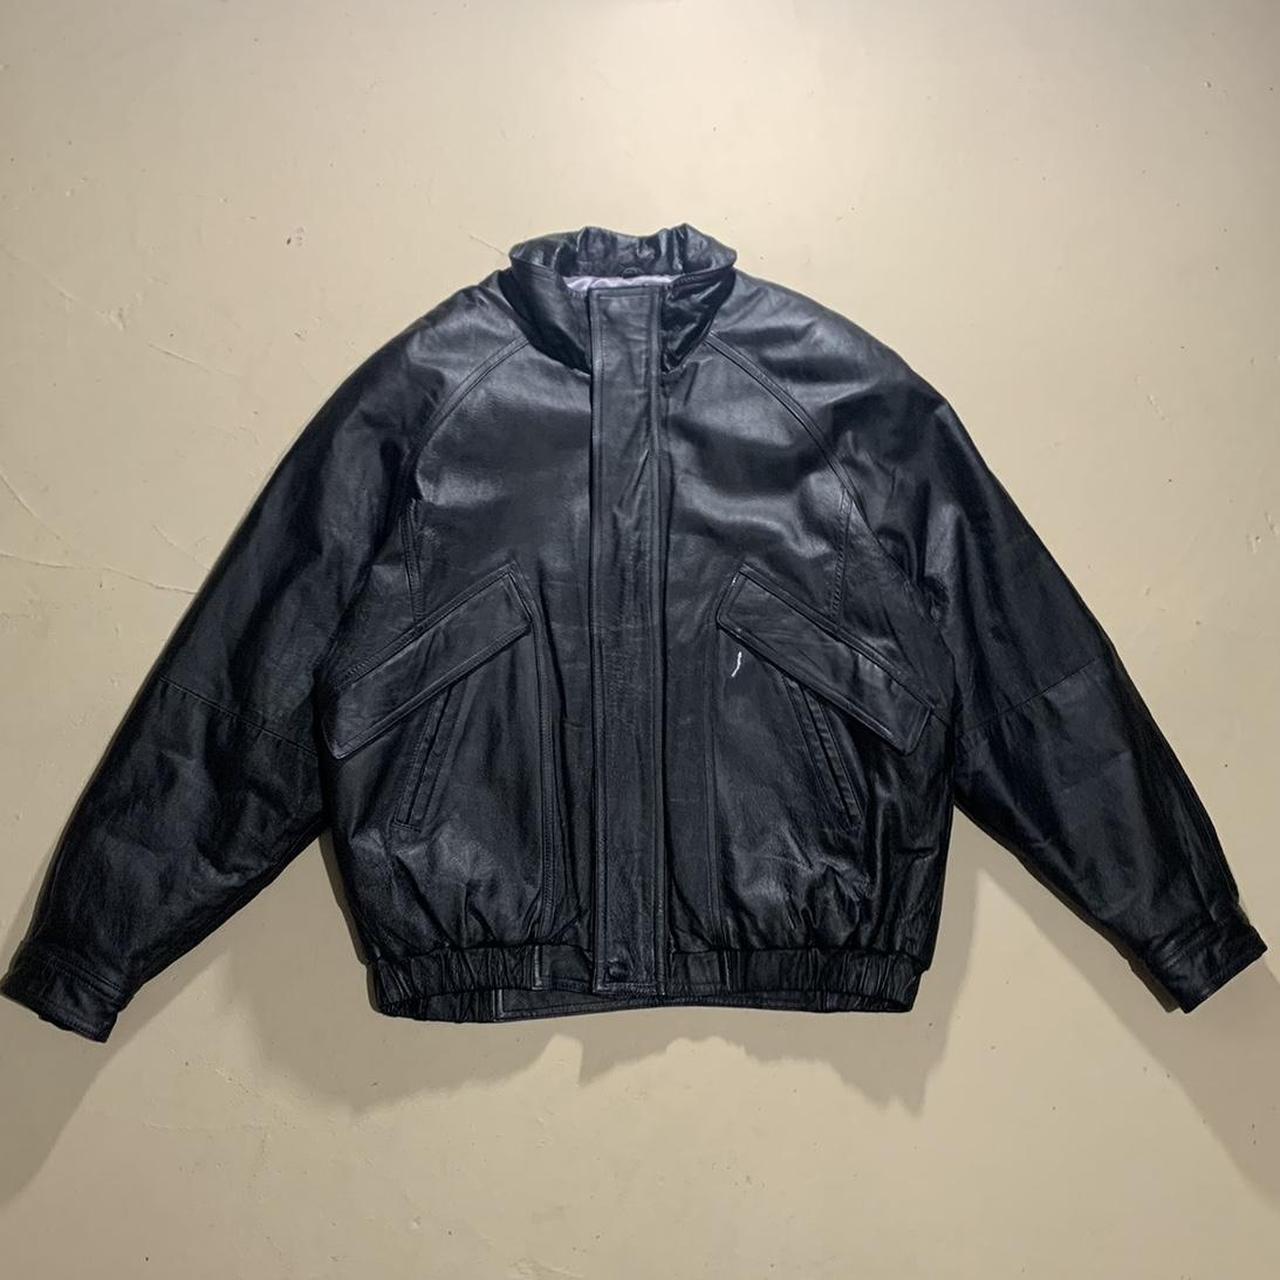 Vintage Joshua Ross Leather Jacket Size - L Pit To... - Depop